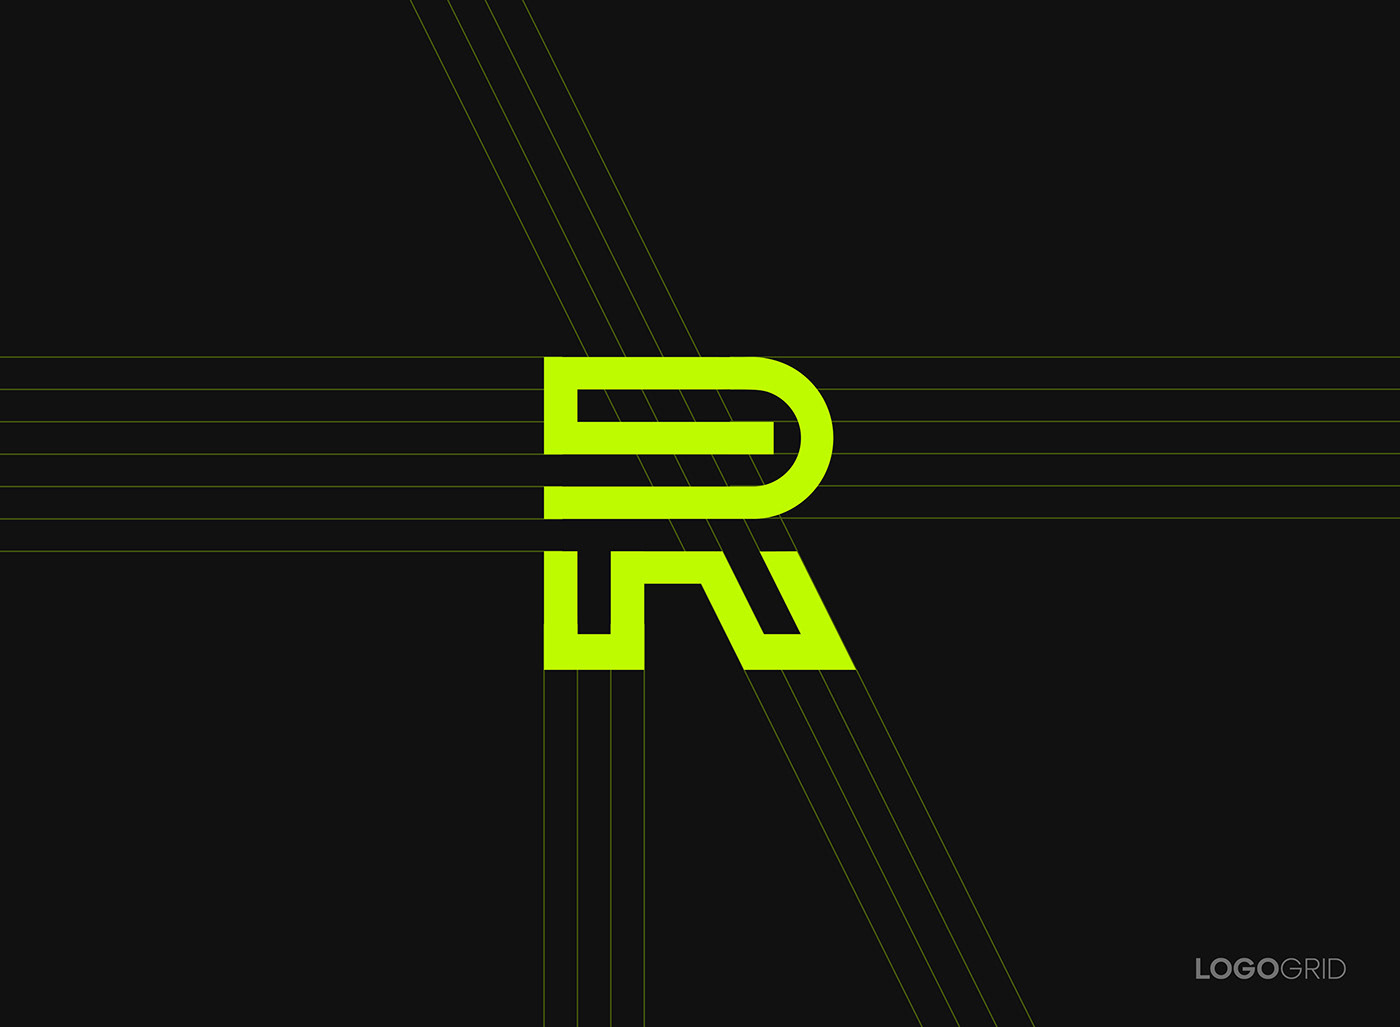 Unique R Rander system logo & Branding identity design.